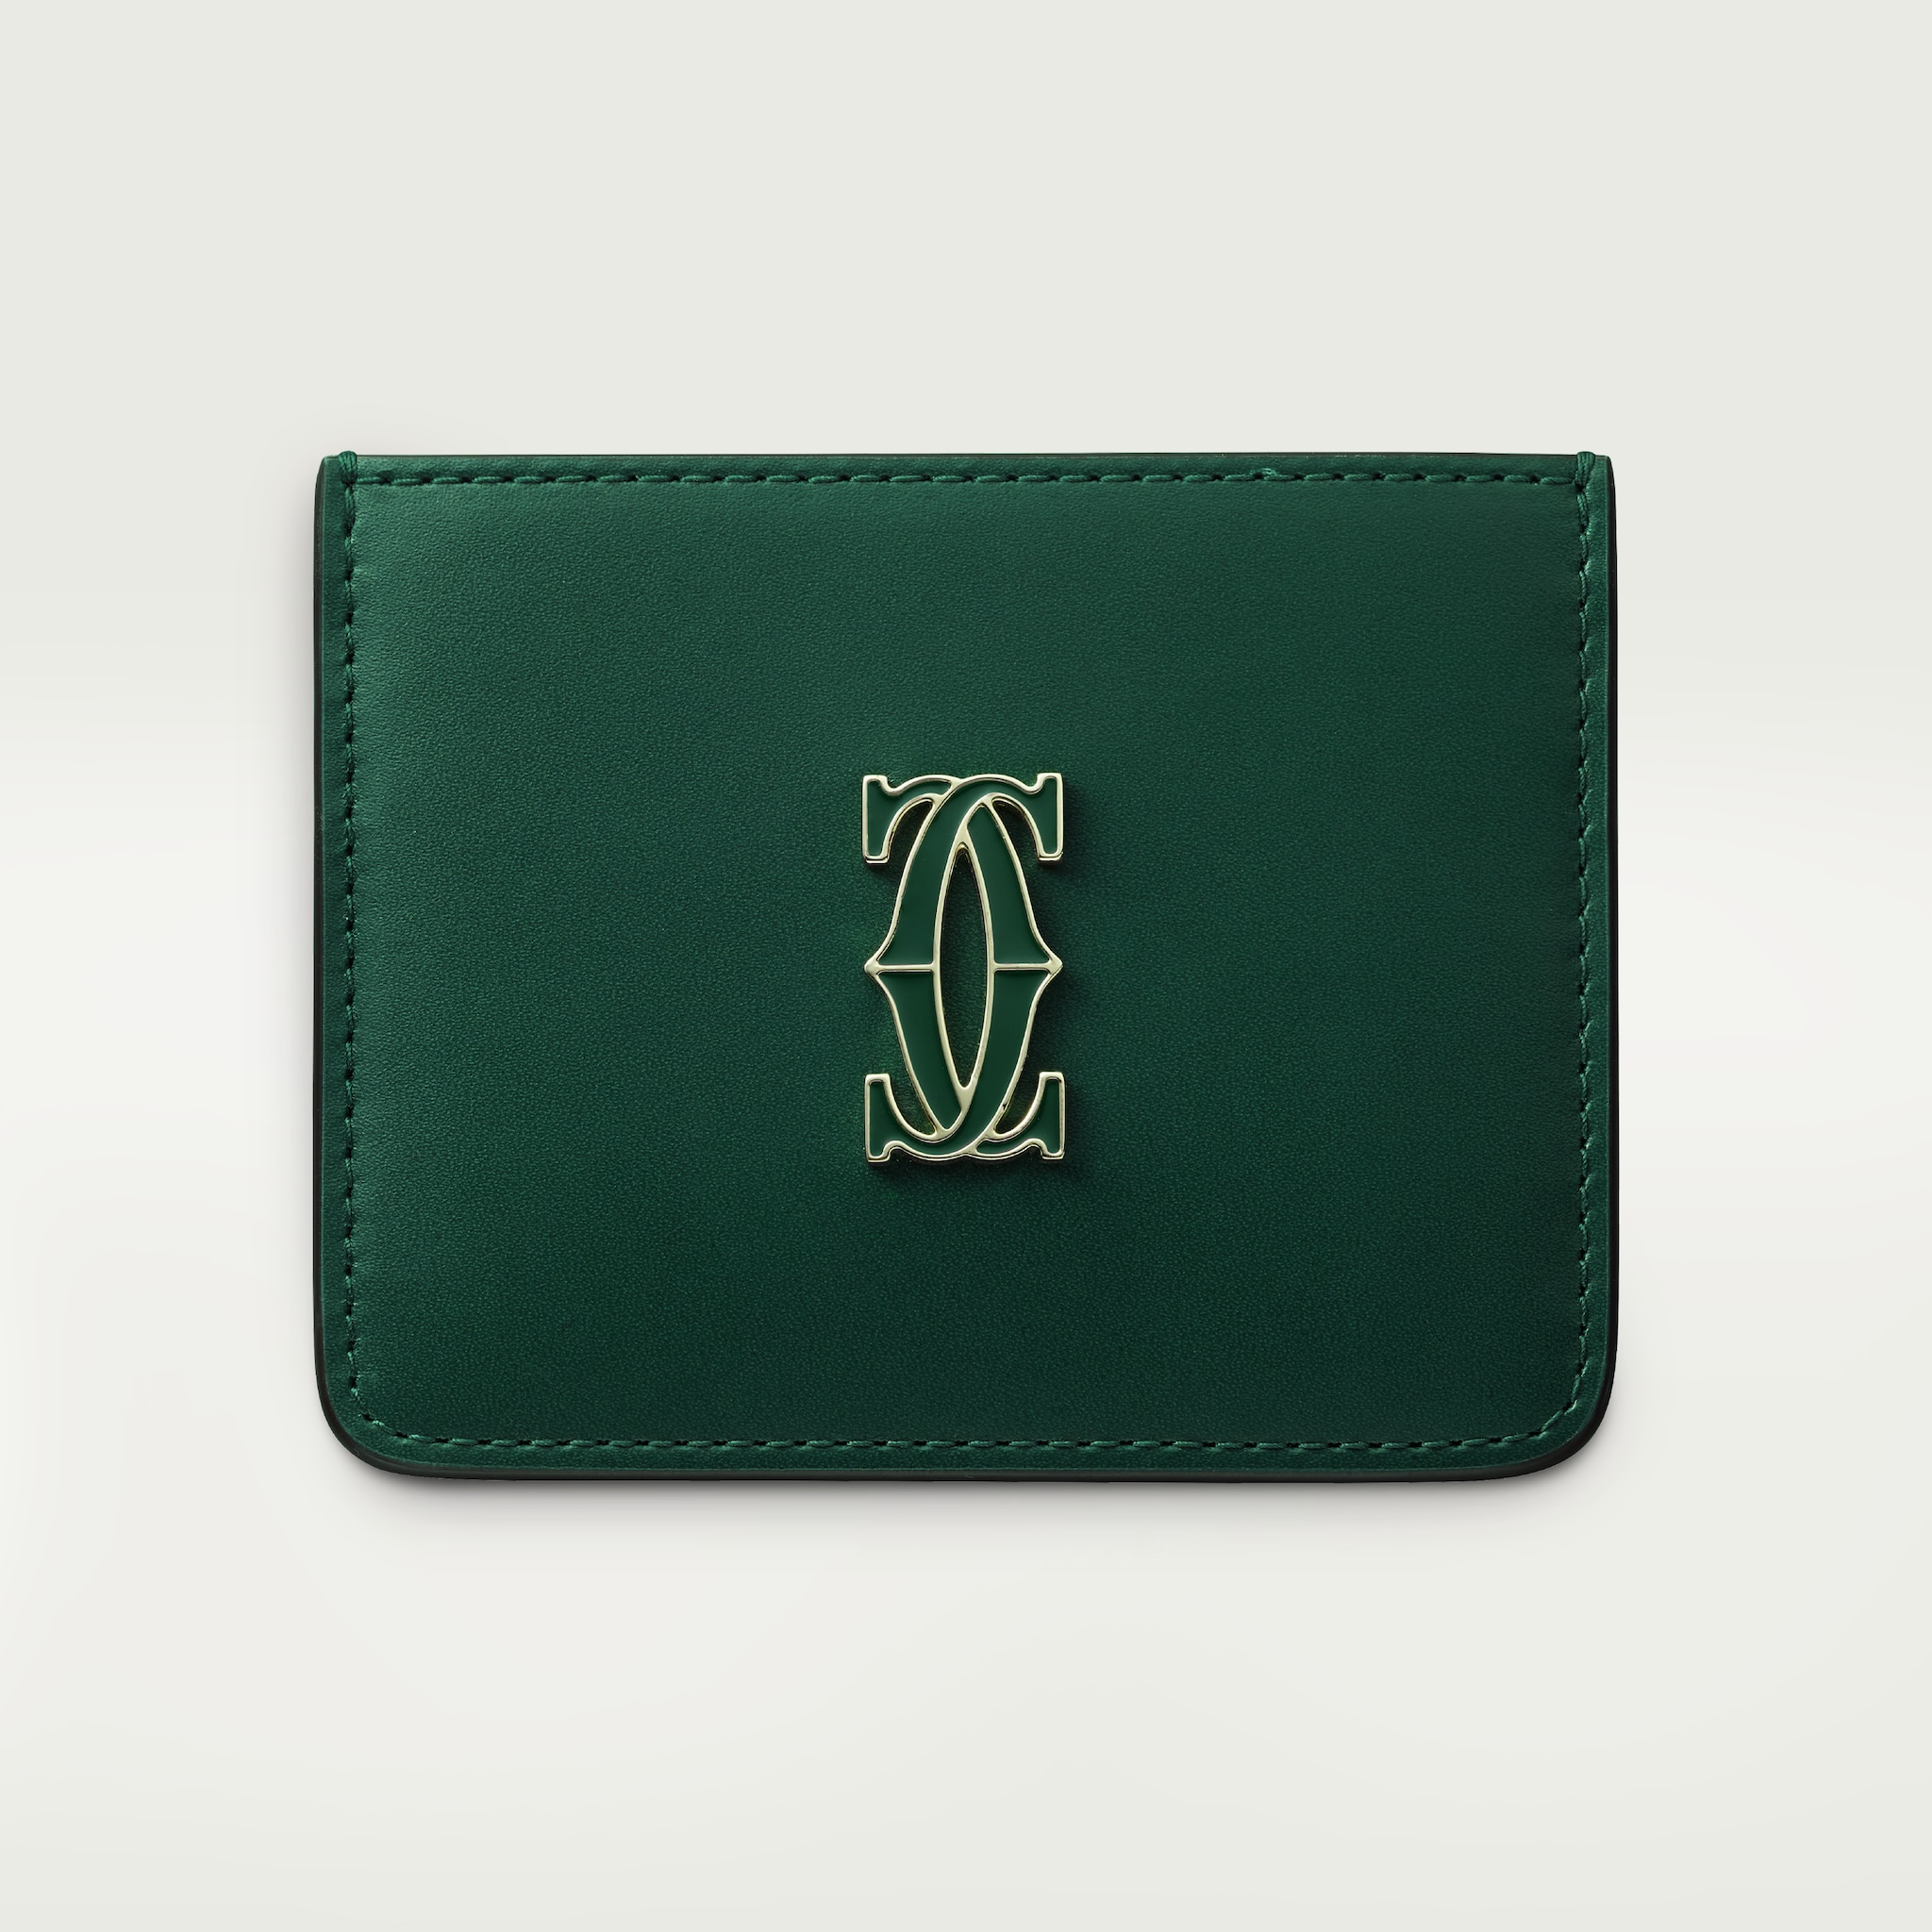 Simple Card Holder, C de CartierDark green calfskin, gold and dark green enamel finish